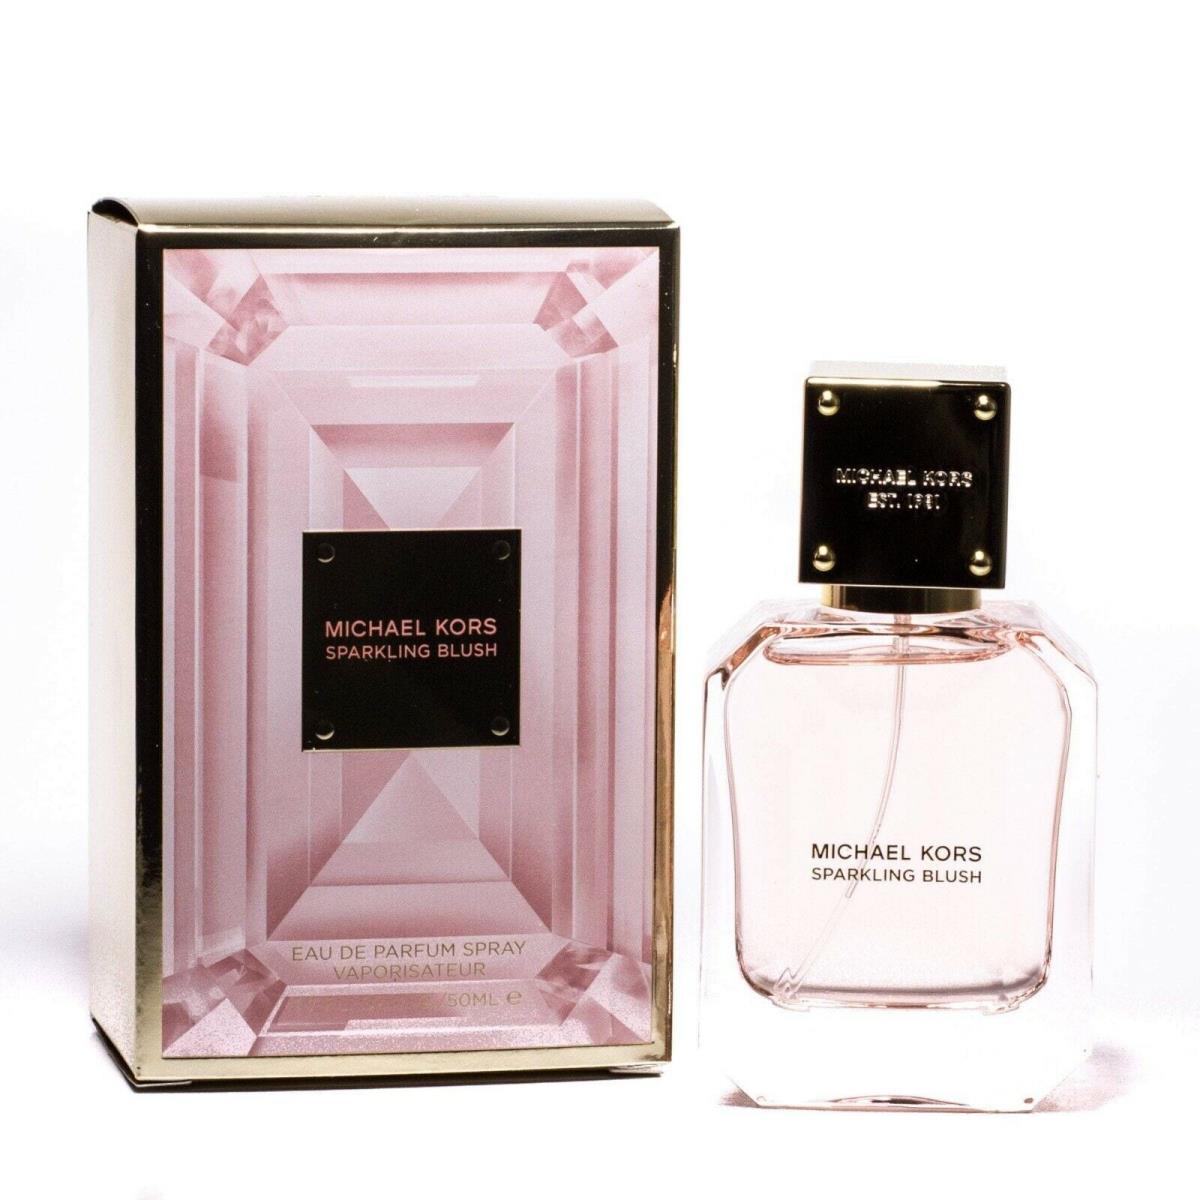 Michael Kors Sparkling Blush 1.7 Oz Eau De Parfum Spray For Women